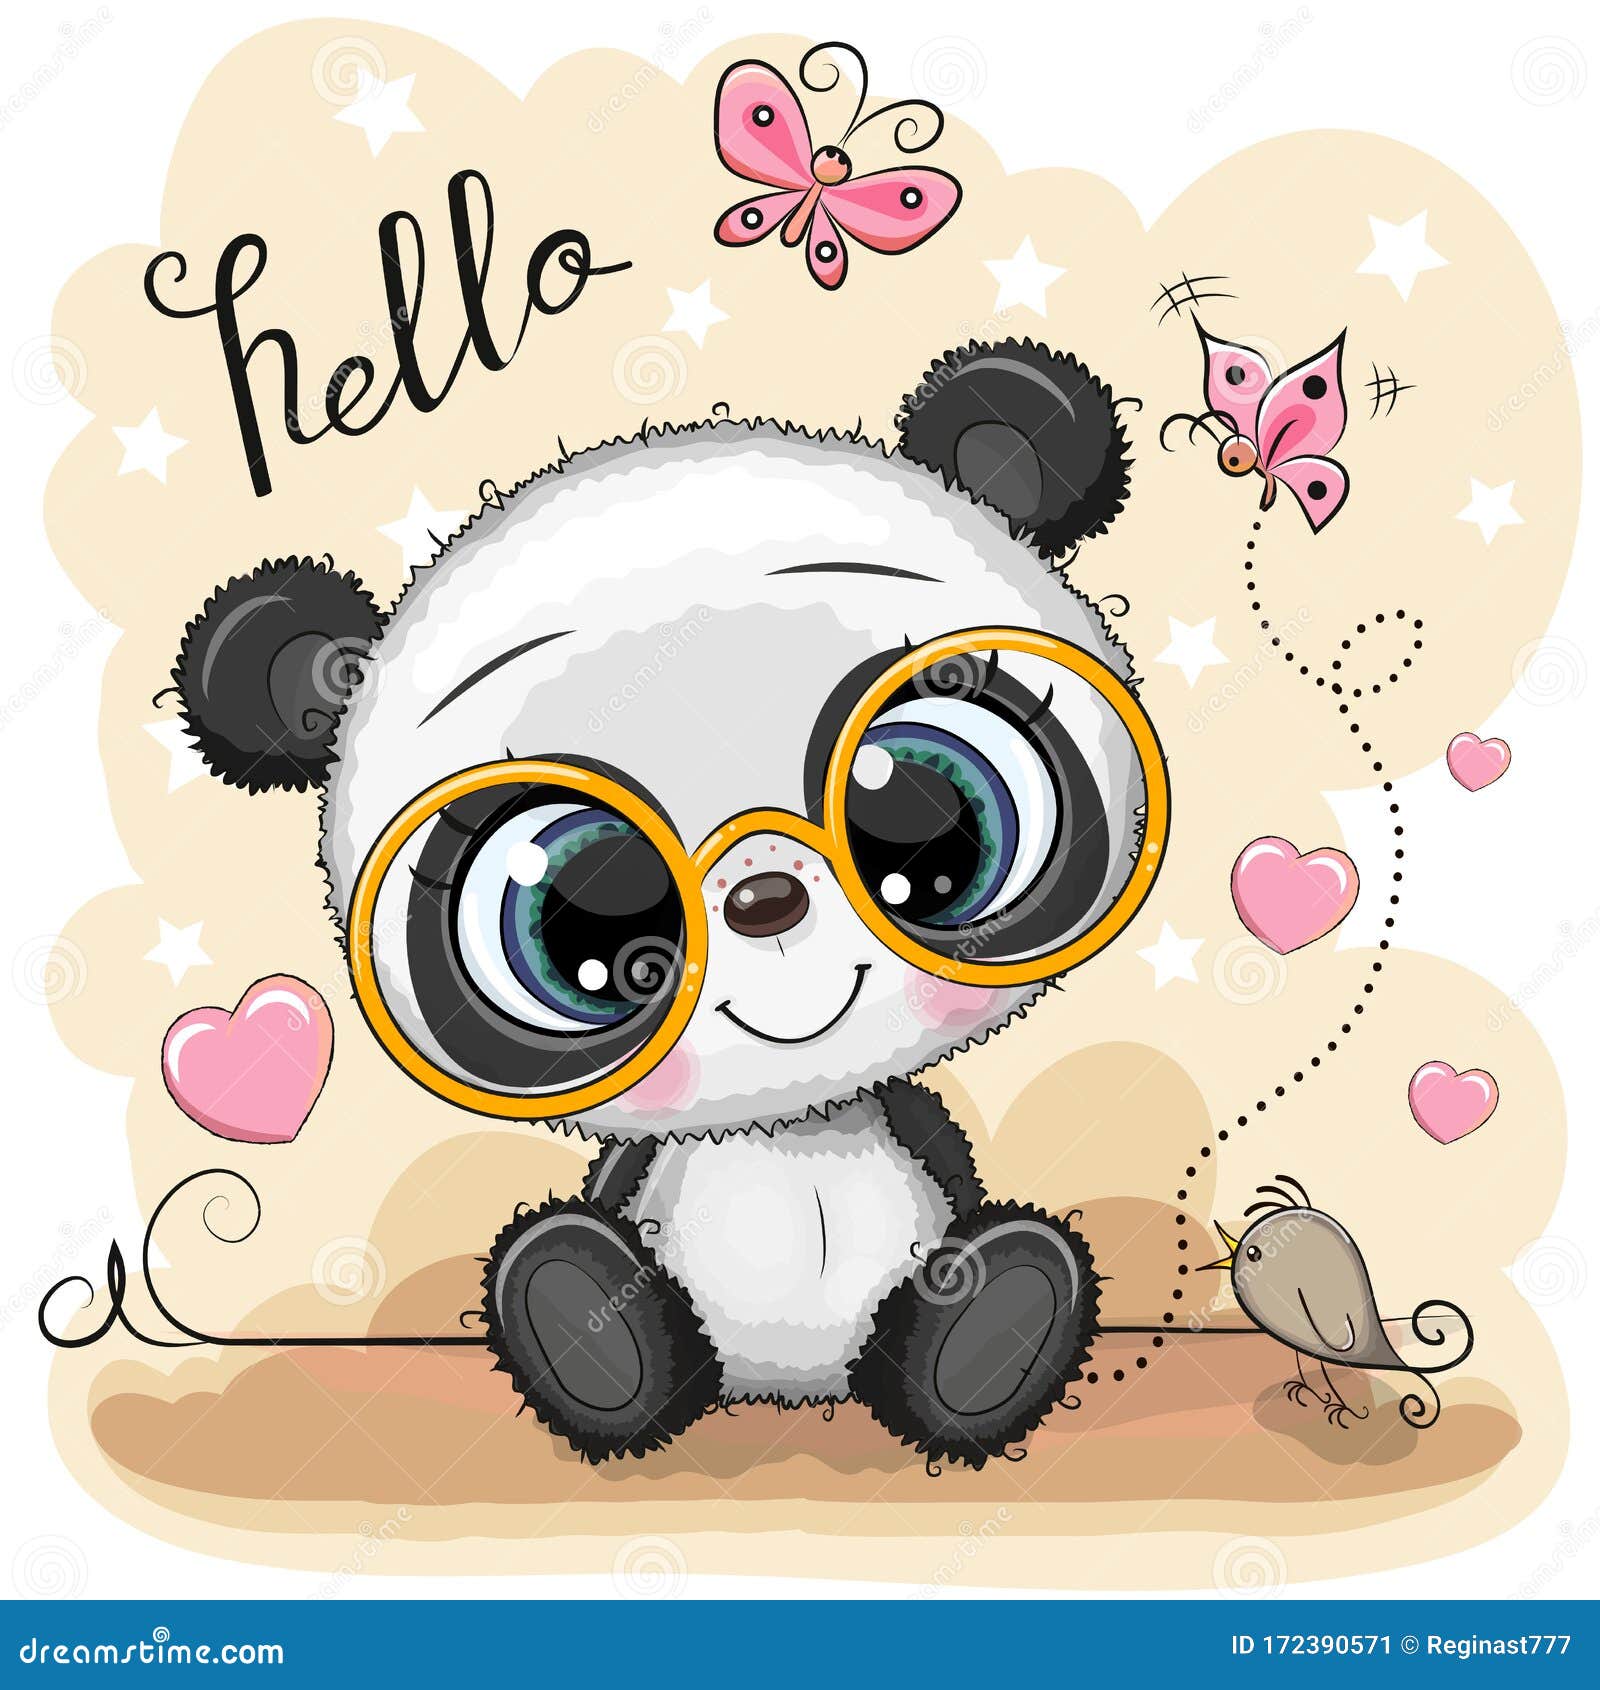 Premium Vector  Cute panda bear with glasses illustration.